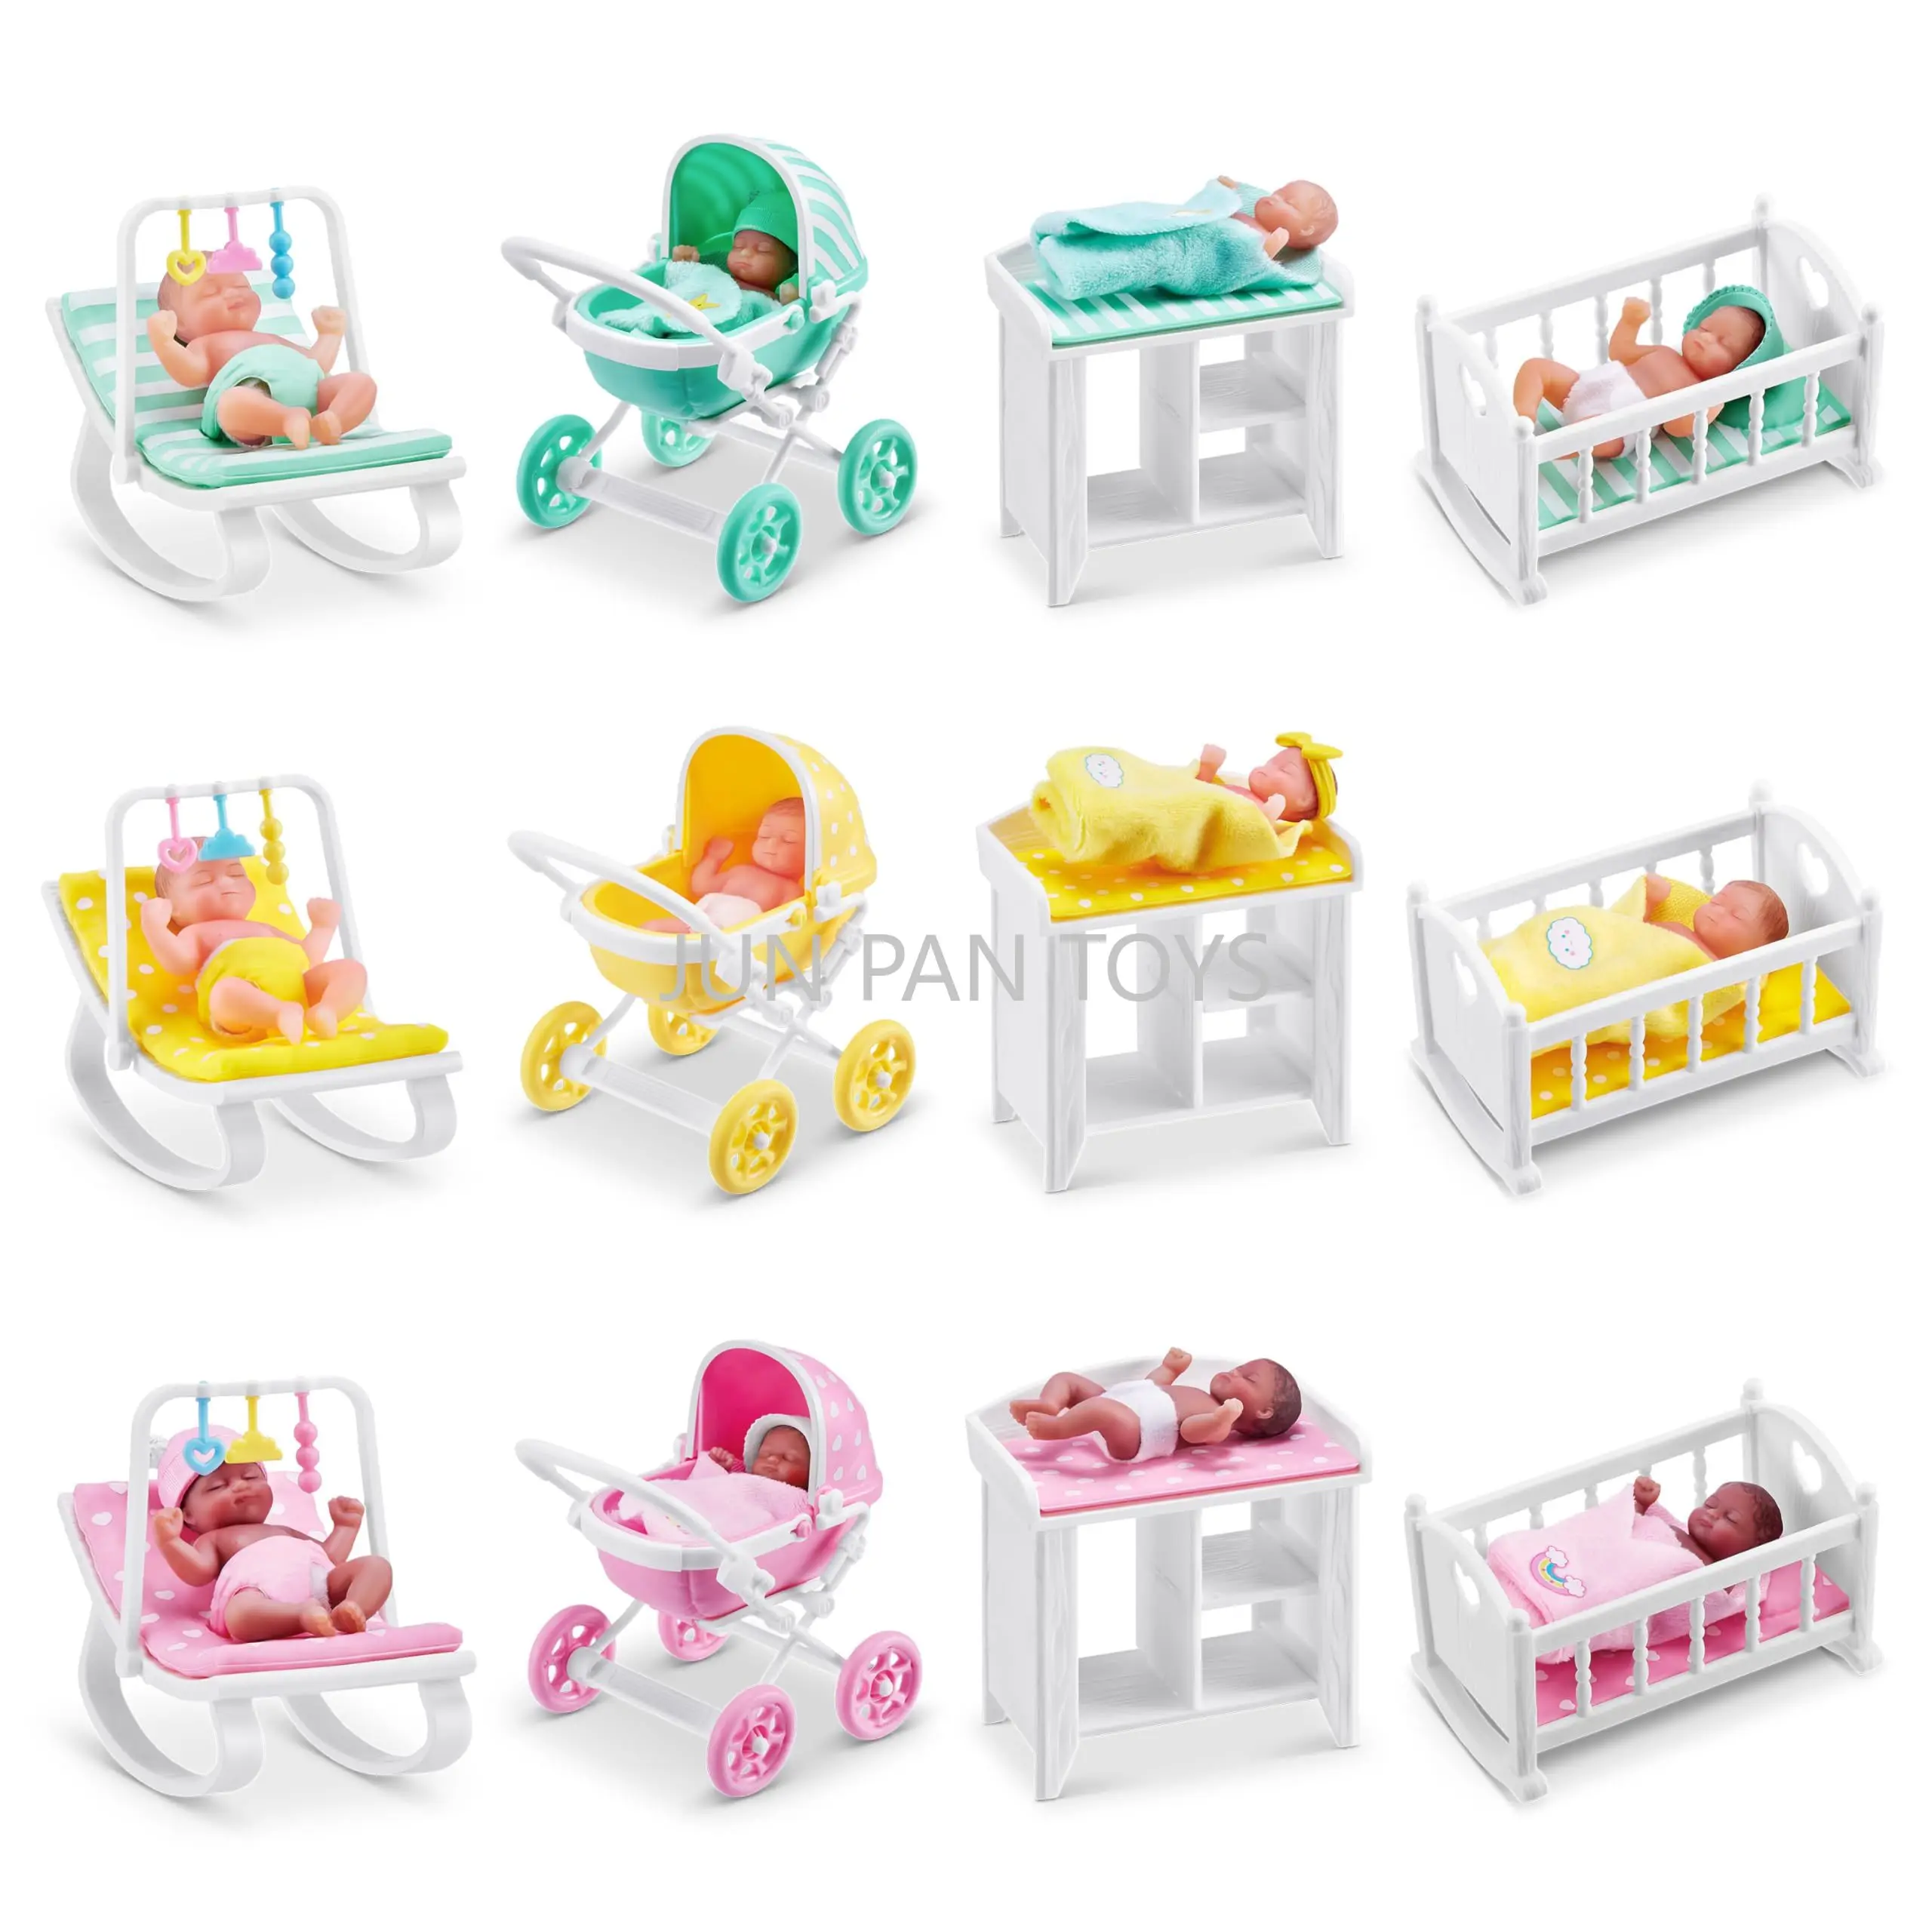 Zuru 5 kejutan seri bayi saya Mini, 1 koleksi mainan kapsul misteri untuk anak perempuan miniatur realistis set bermain dan aksesoris